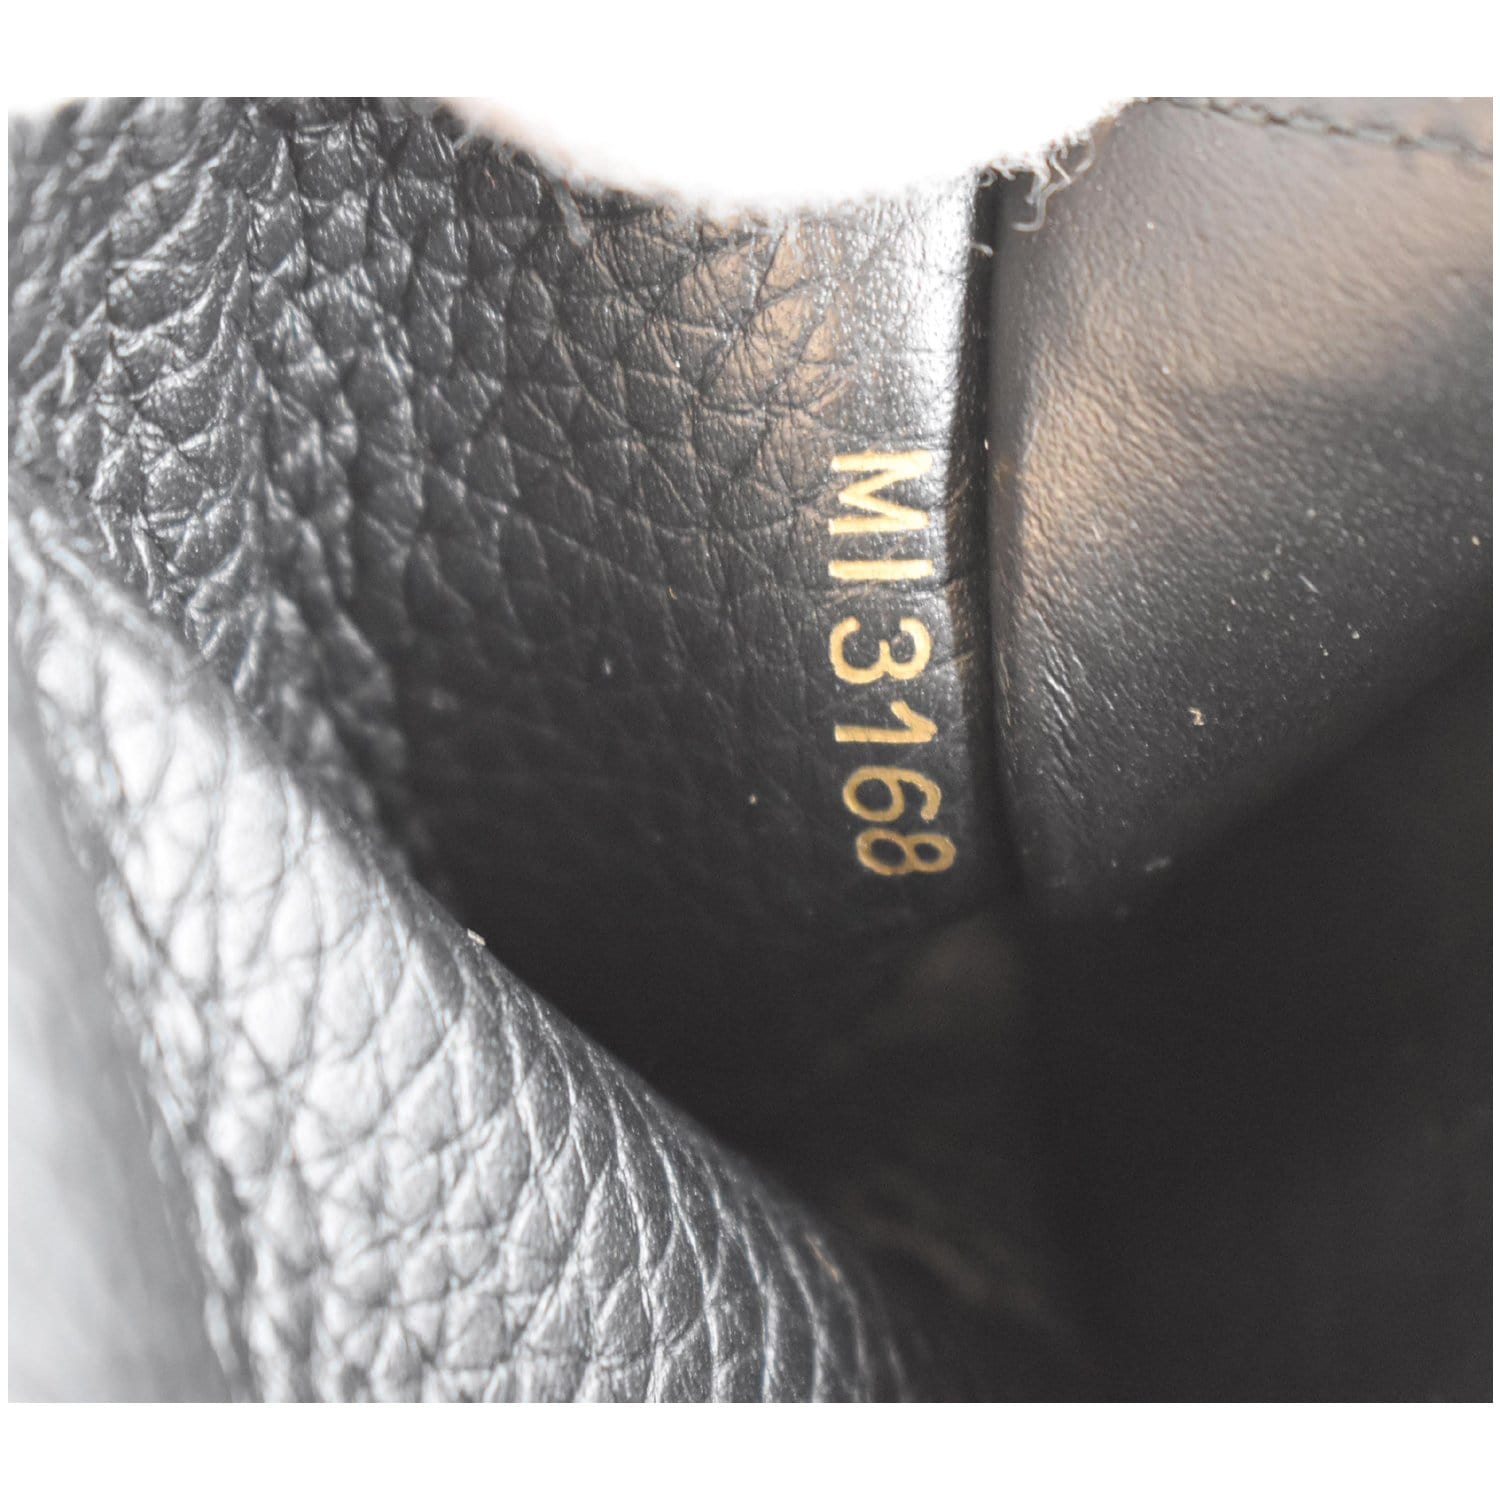 Louis Vuitton Capucines Wallet Embellished Leather Black 21809044